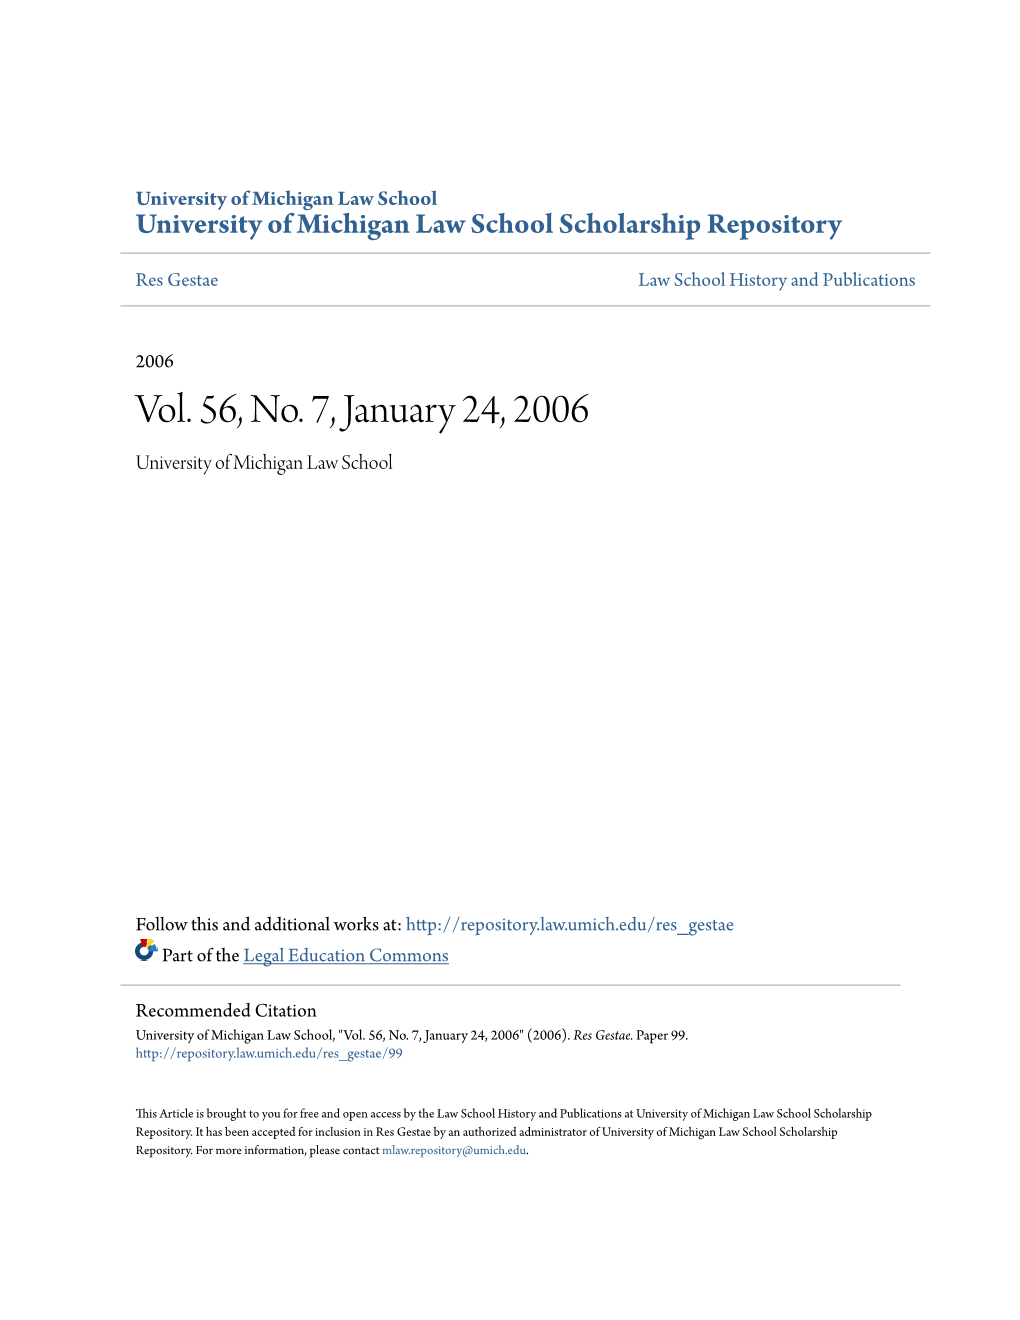 Vol. 56, No. 7, January 24, 2006 University of Michigan Law School